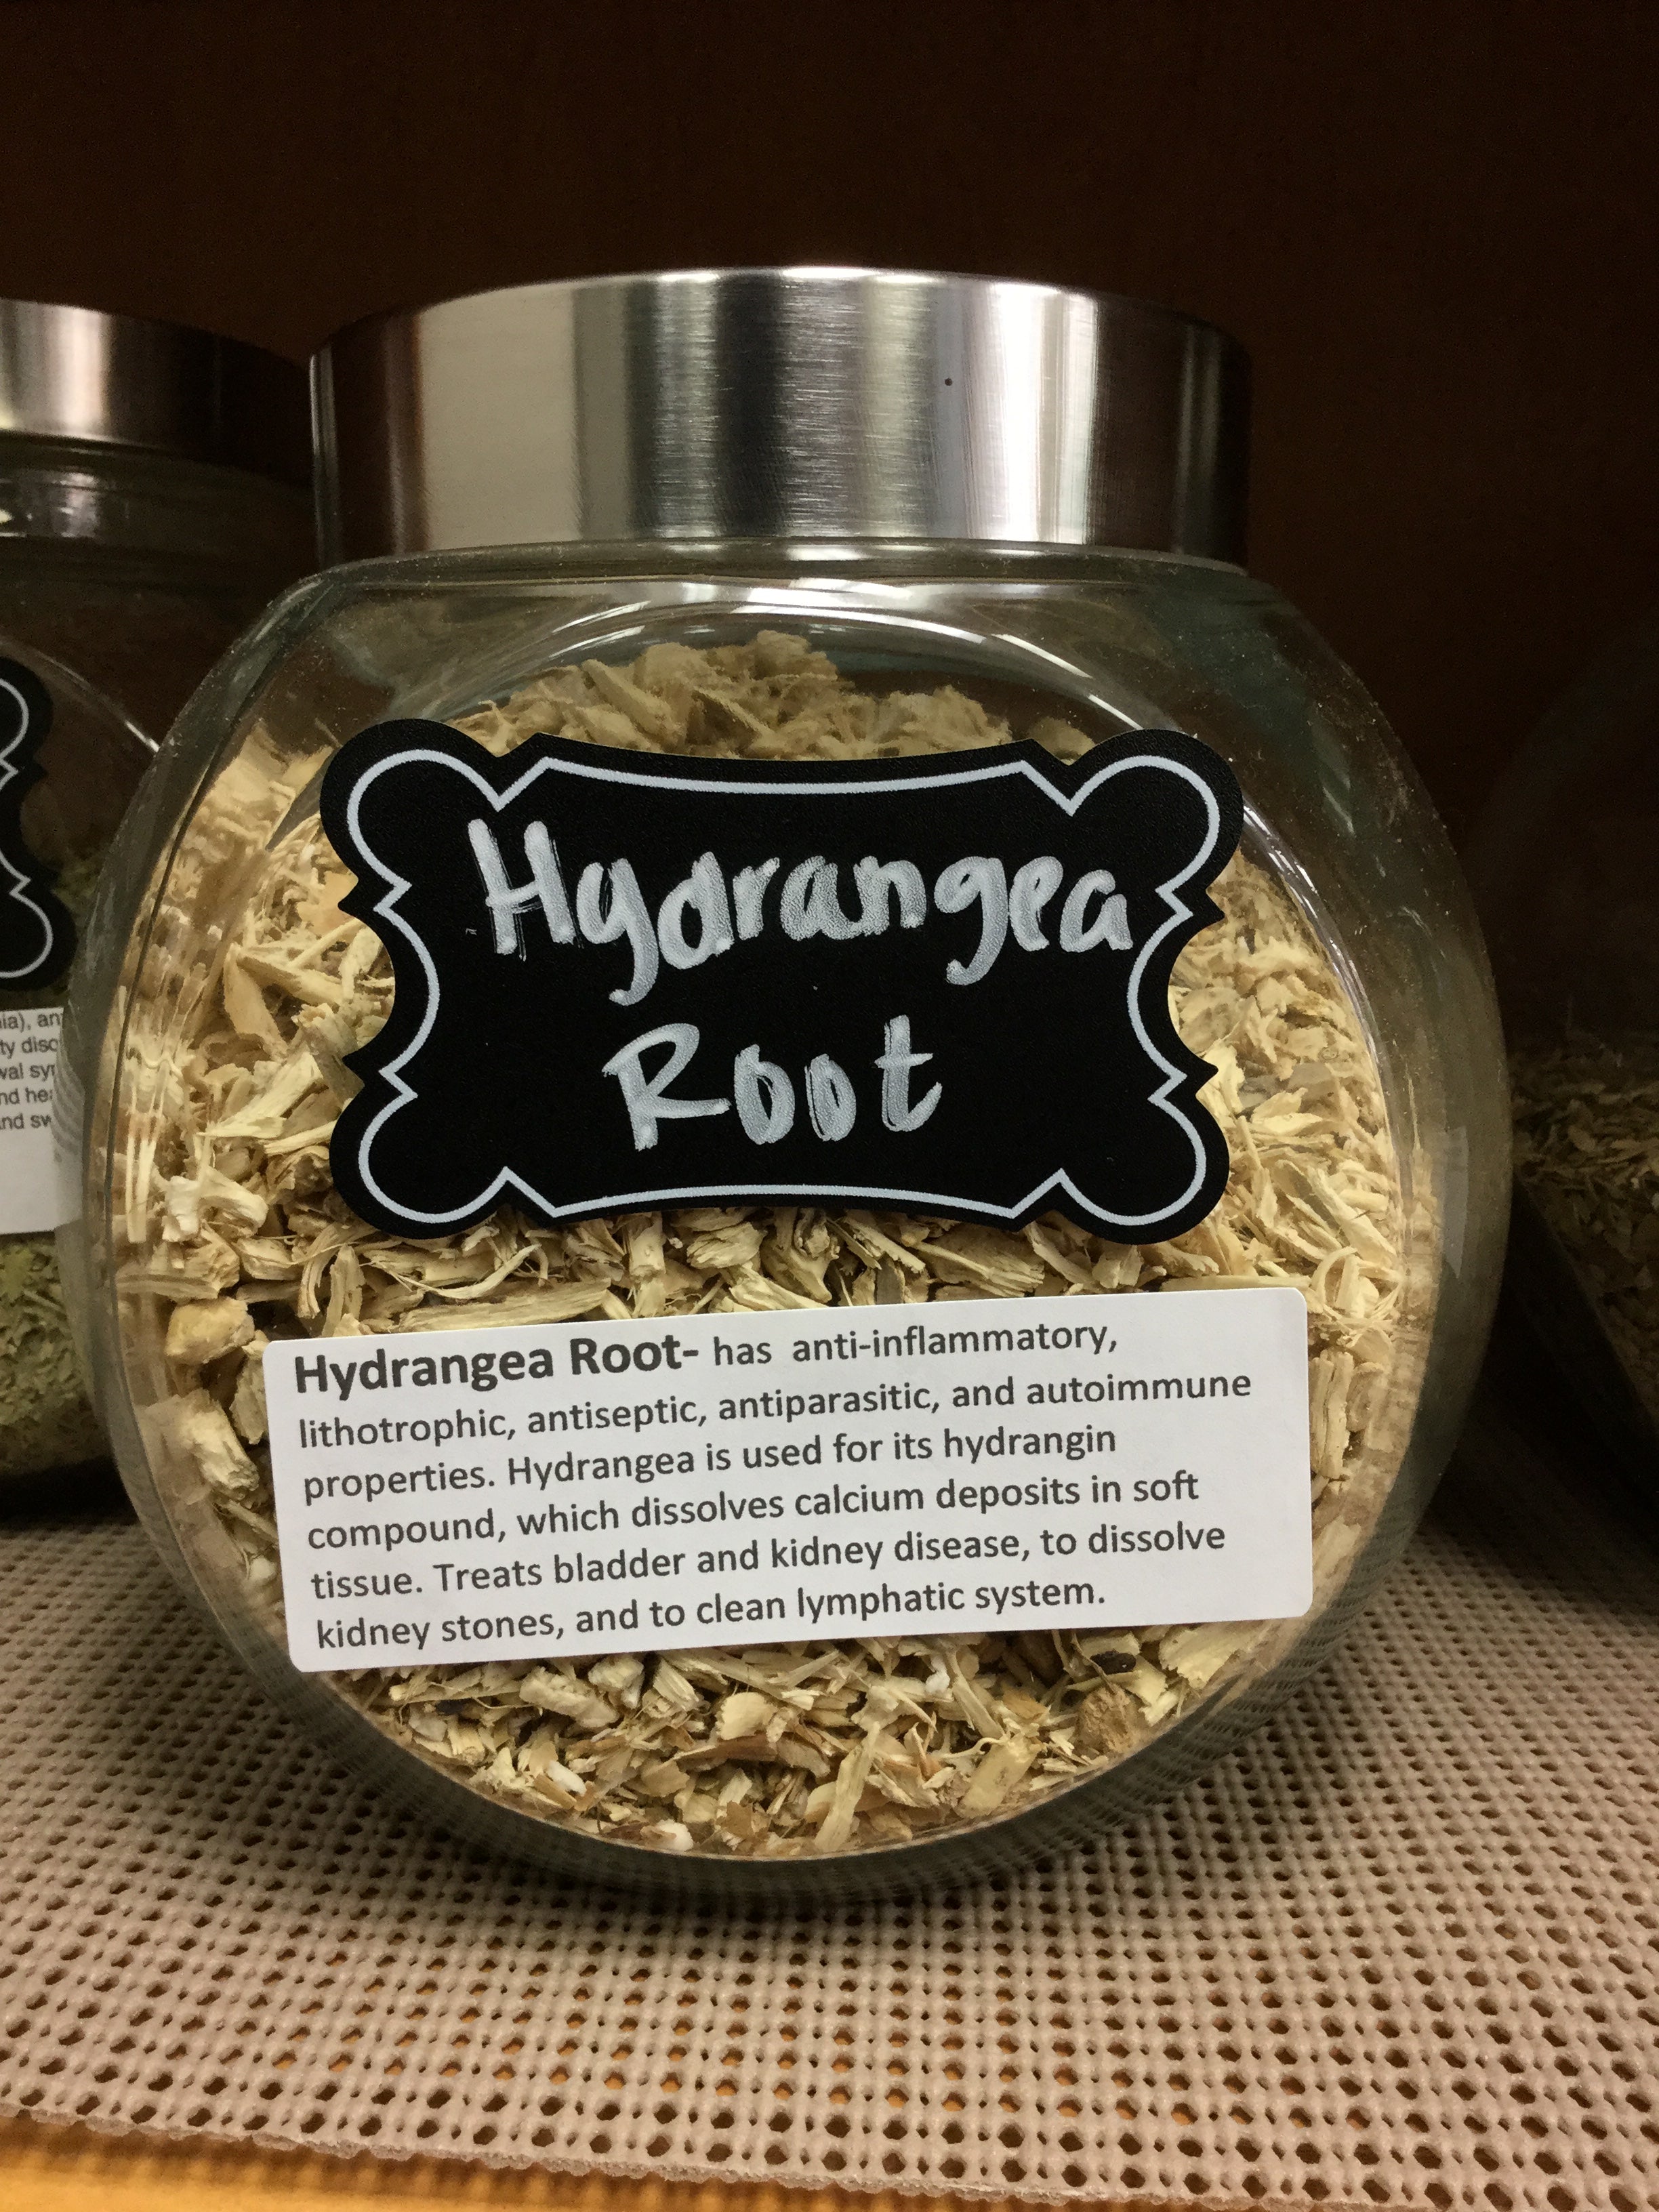 Hydrangea root